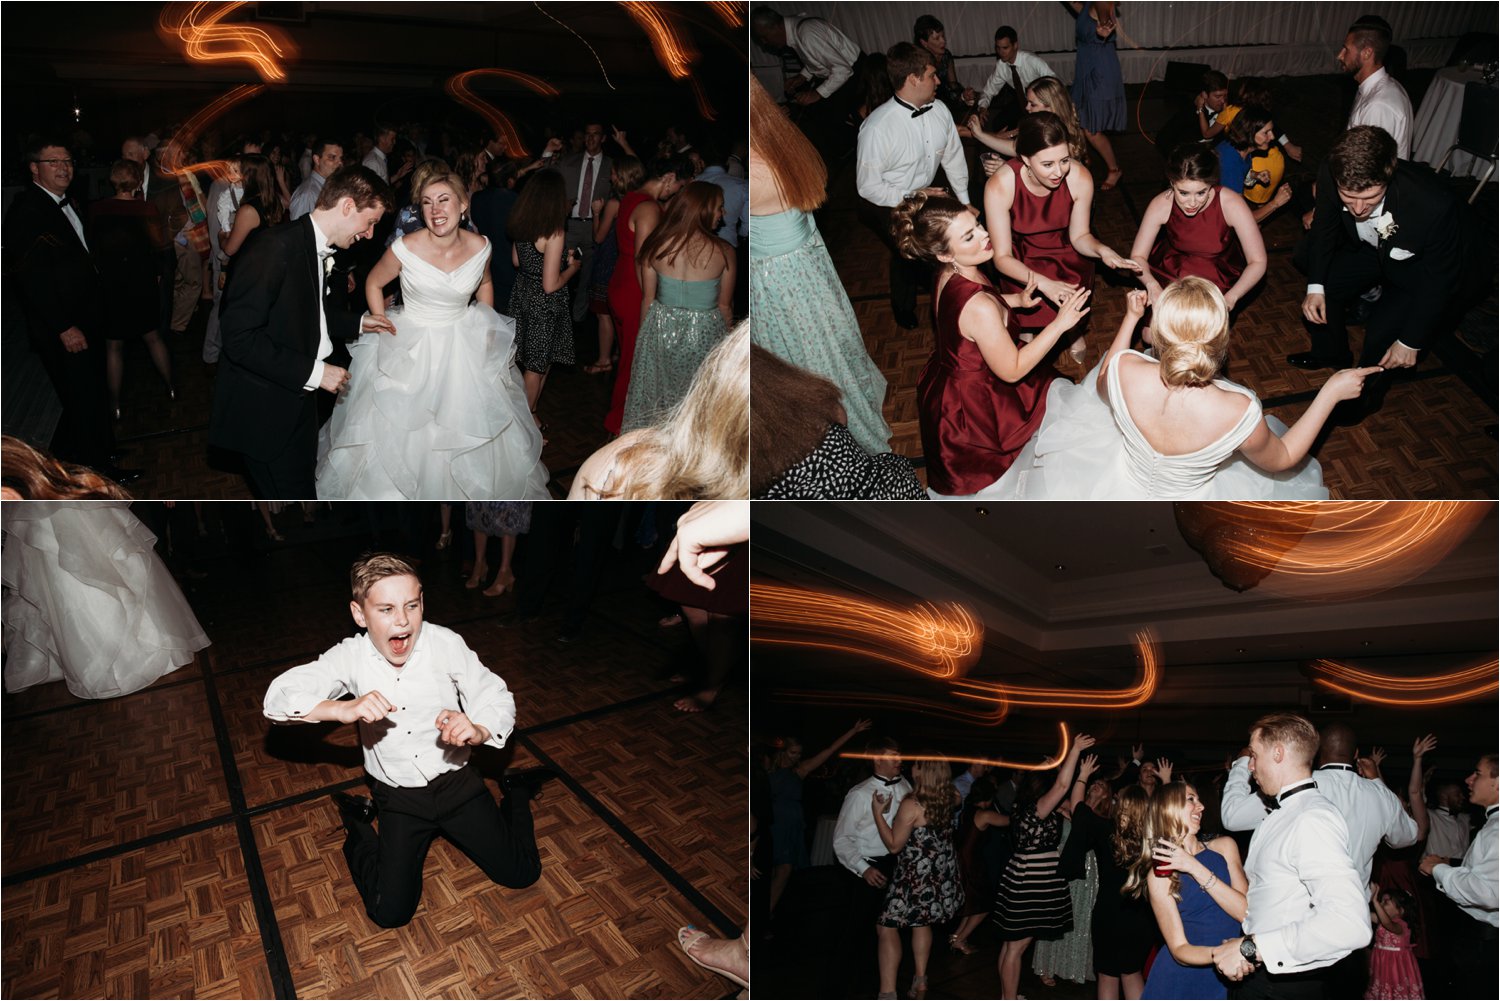   images by feliciathephotographer.com | destination wedding photographer | kansas city | summertime | classic | dance floor | party | dj lights | laughter | singing | bride and groom | 